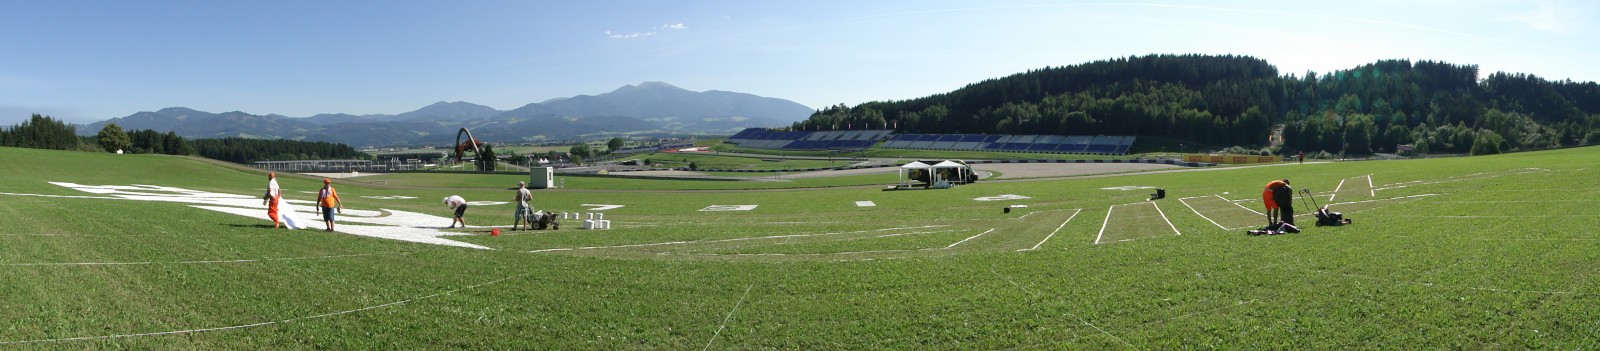 Working on grass branding - Red Bull Air Race Spielberg Austria | Mural malowany na trawie - RedBull Air Race Austria | Portfolio